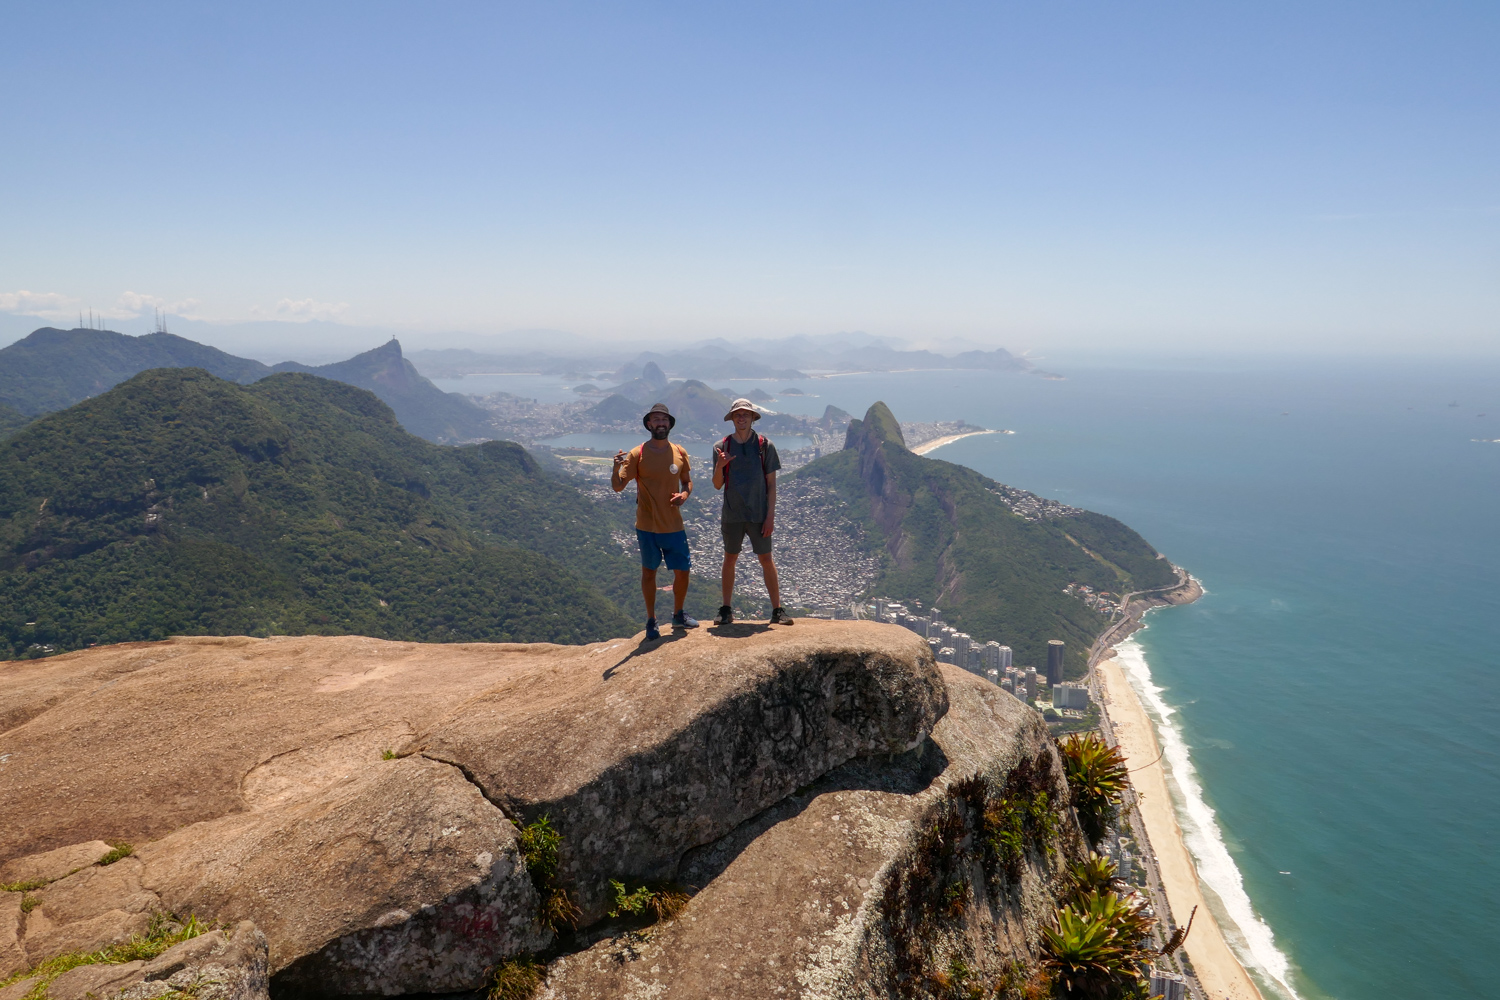 Views of Rio de Janeiro while standing atop Pedra da Gavea.